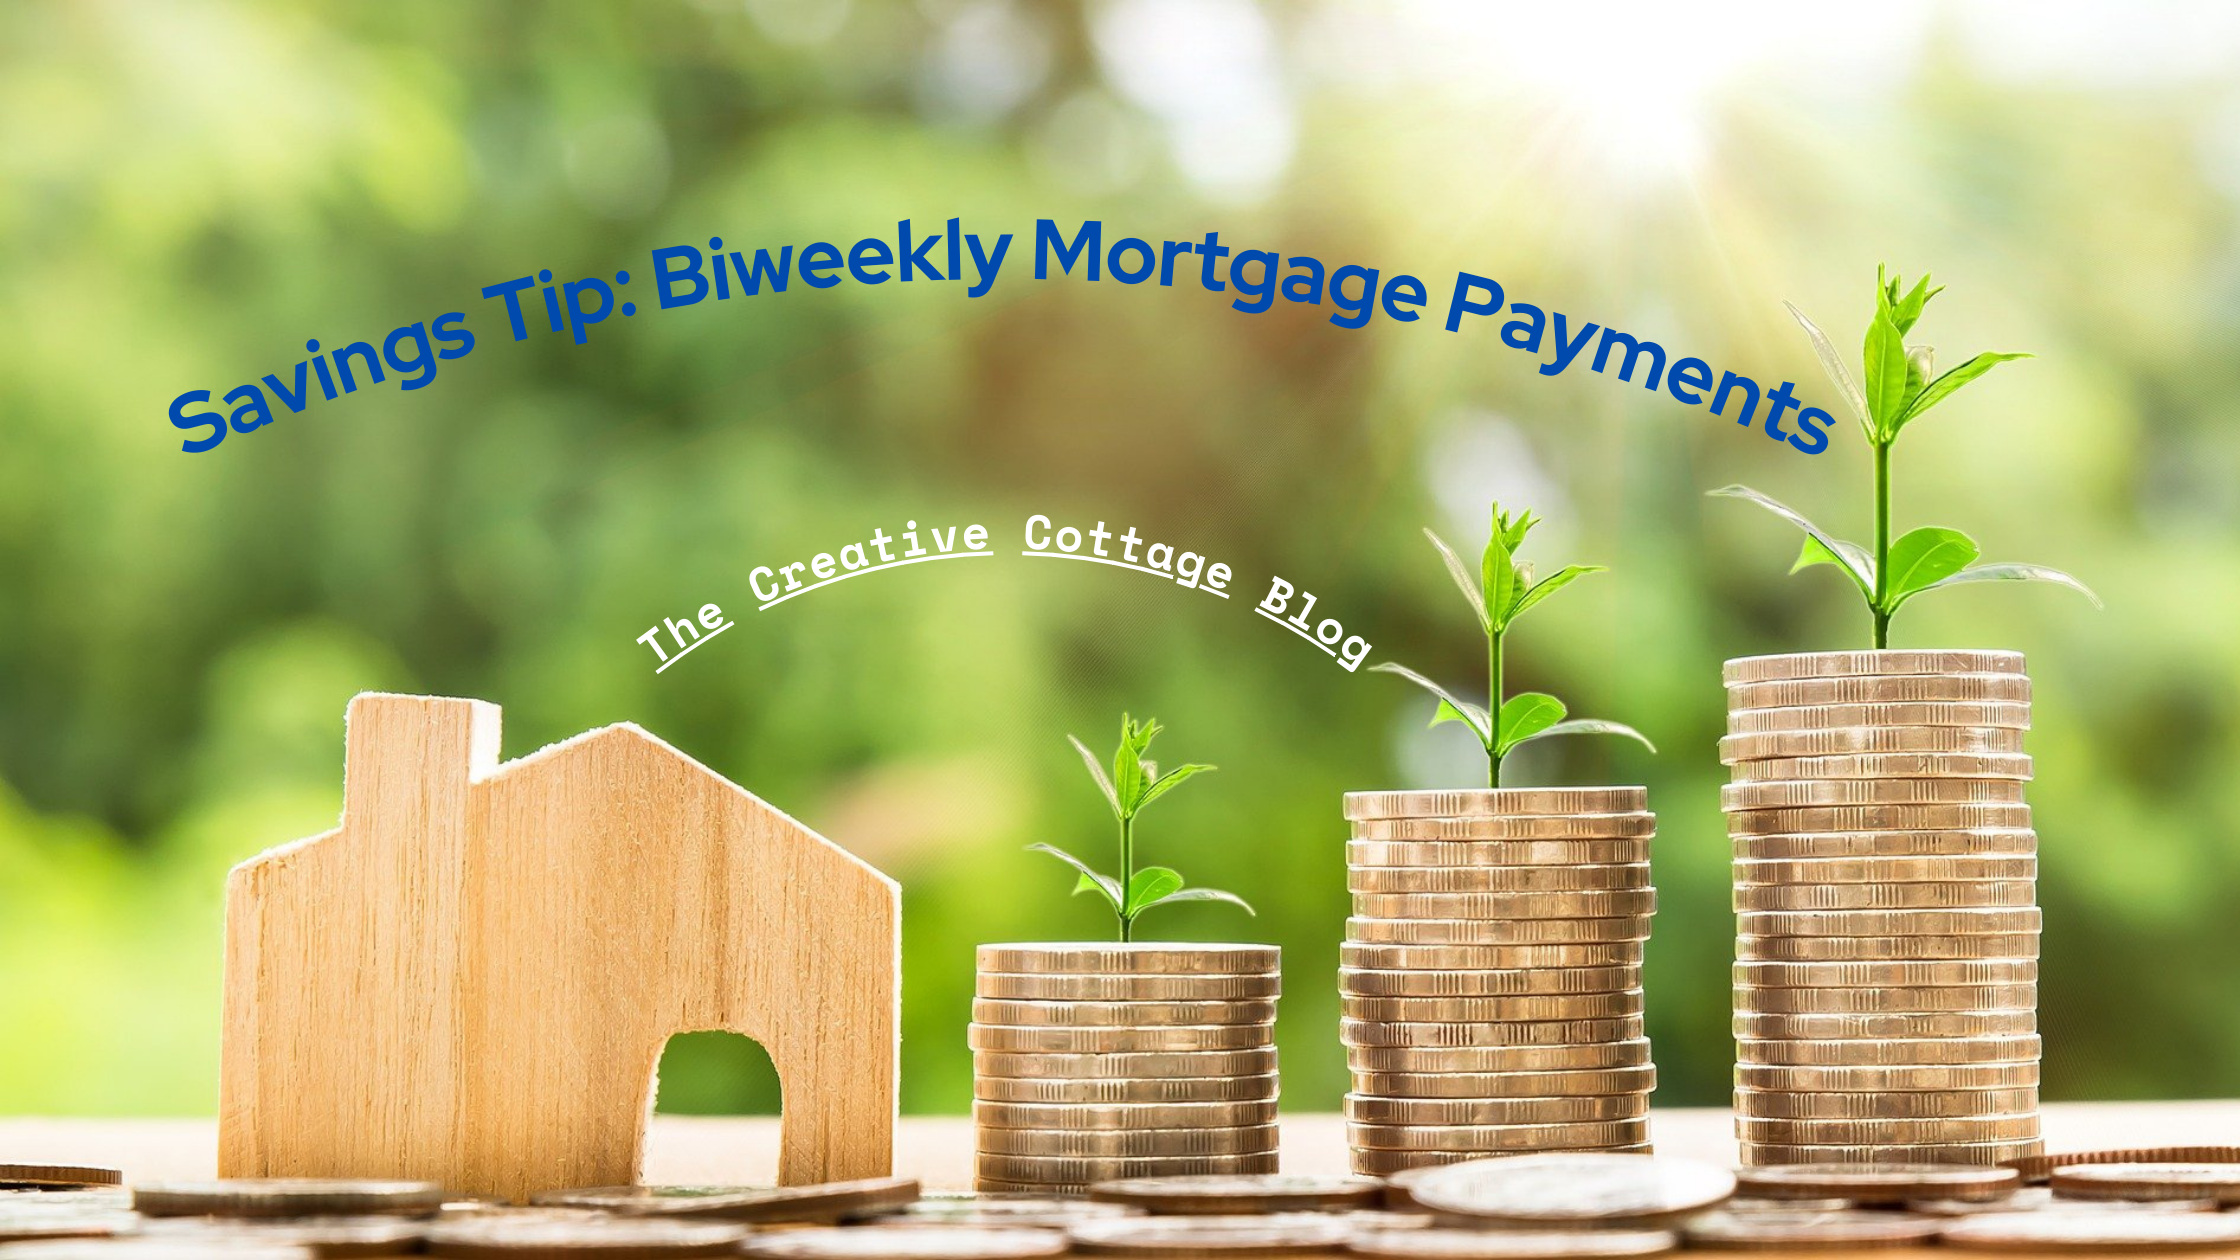 savings tip biweekly mortgage payments